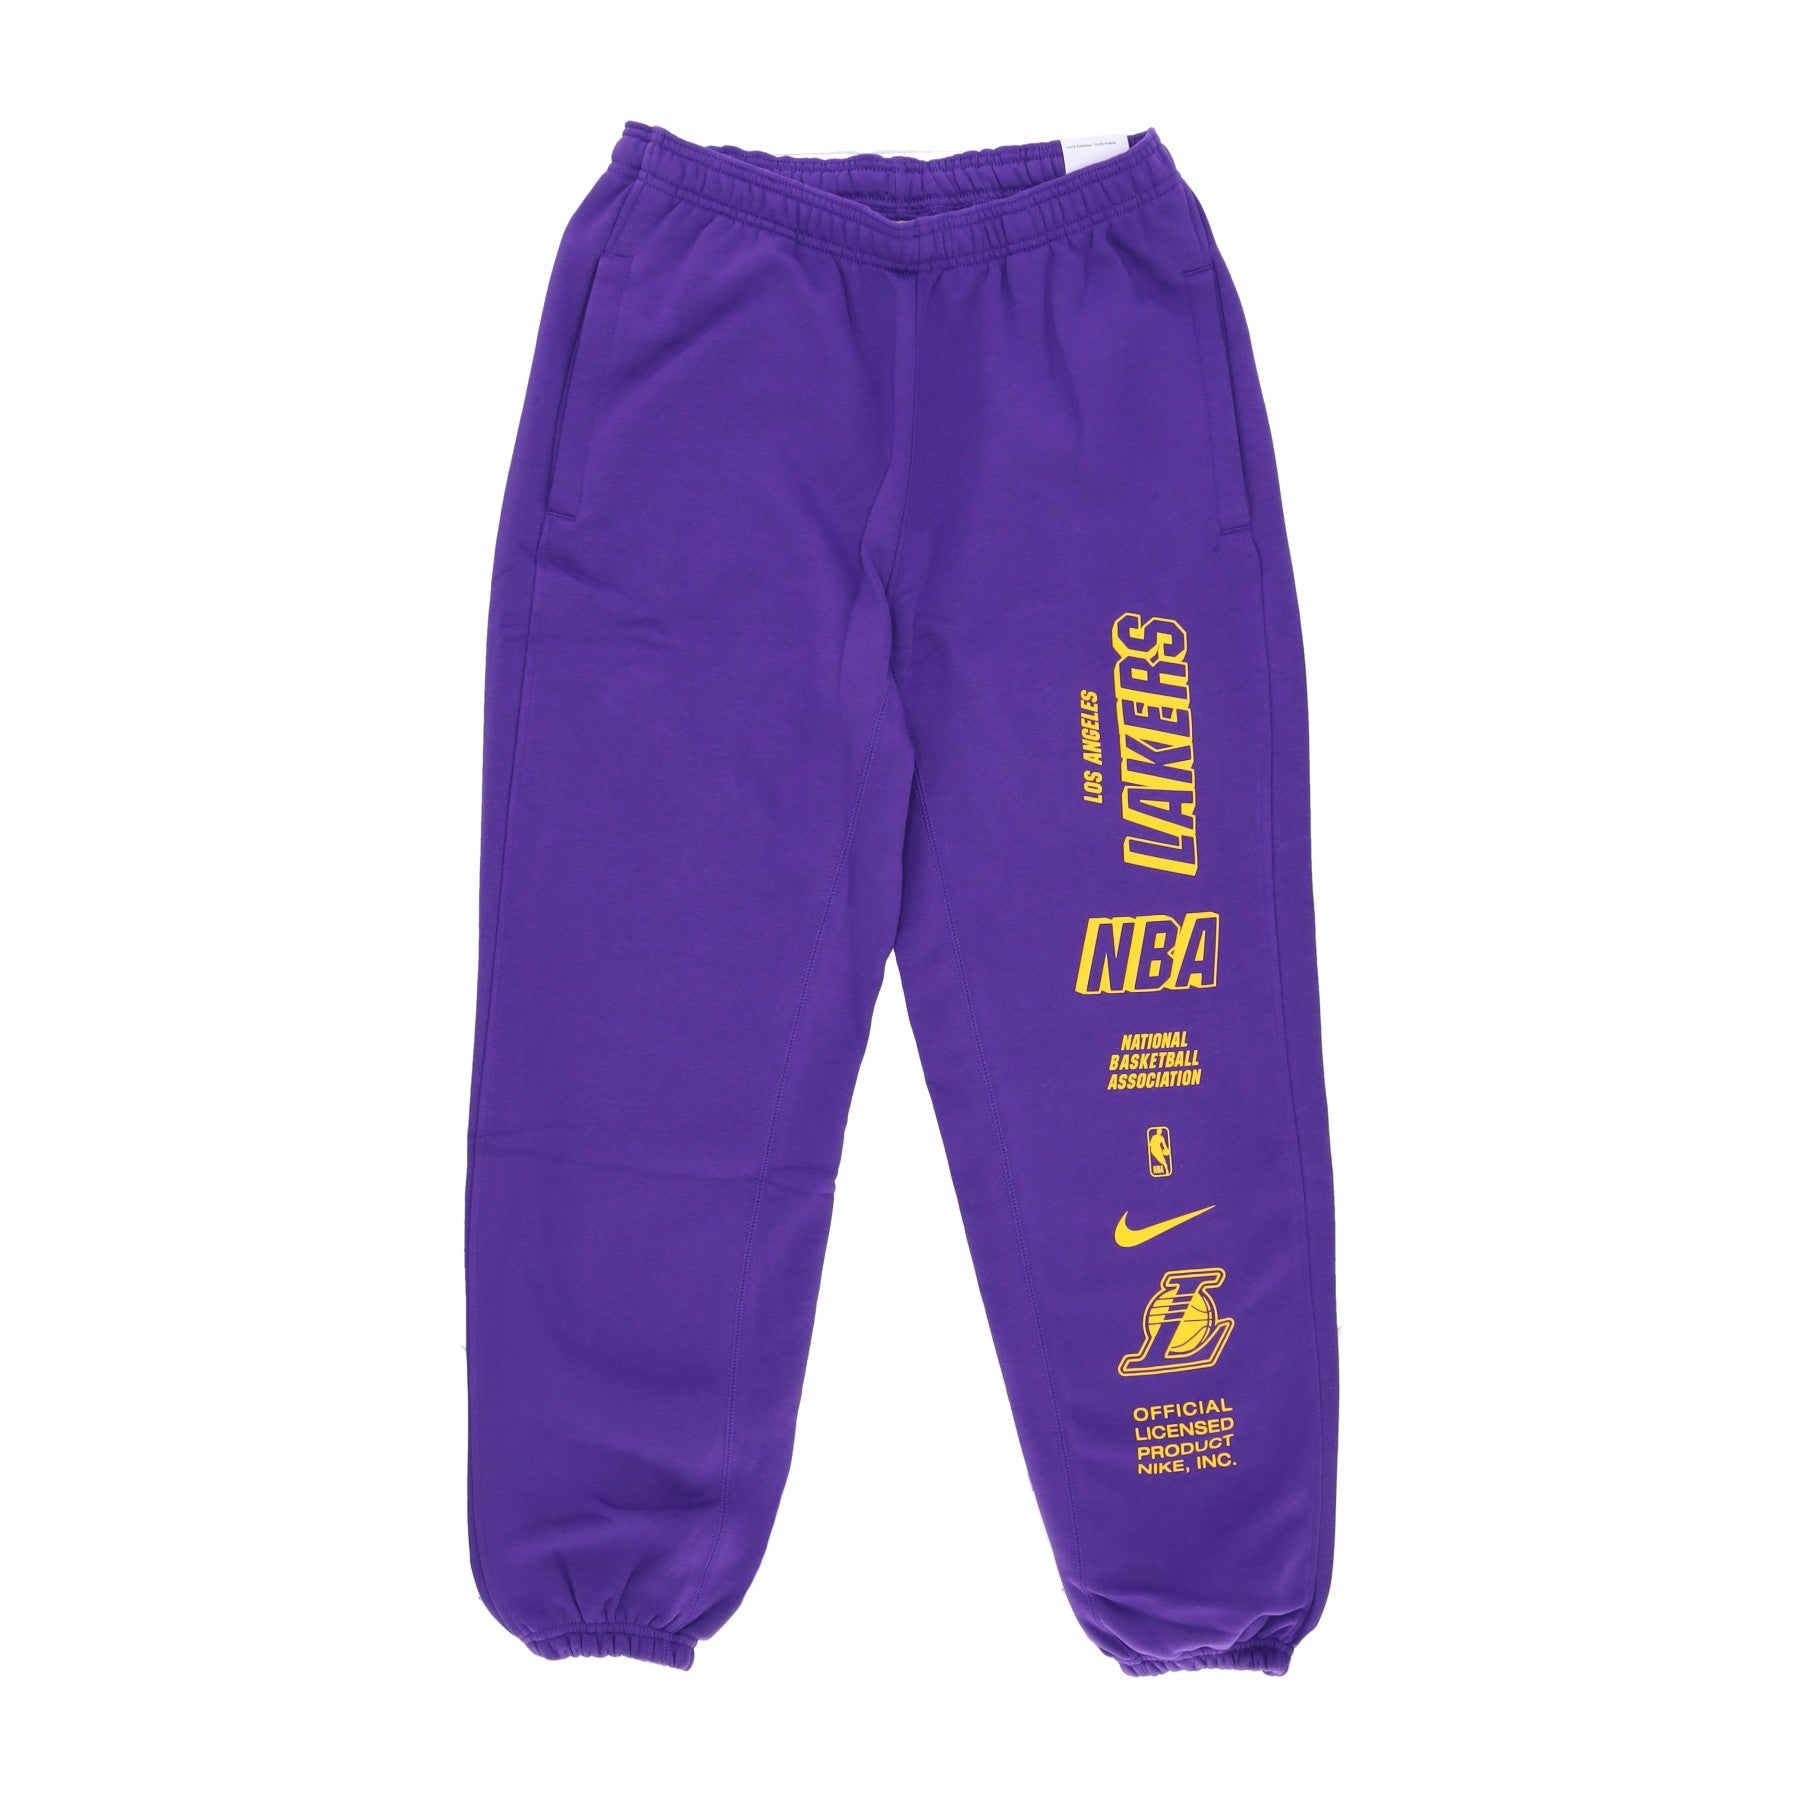 Nike Nba, Pantalone Tuta Felpato Uomo Nba Fleece Courtside Pant Loslak, Field Purple